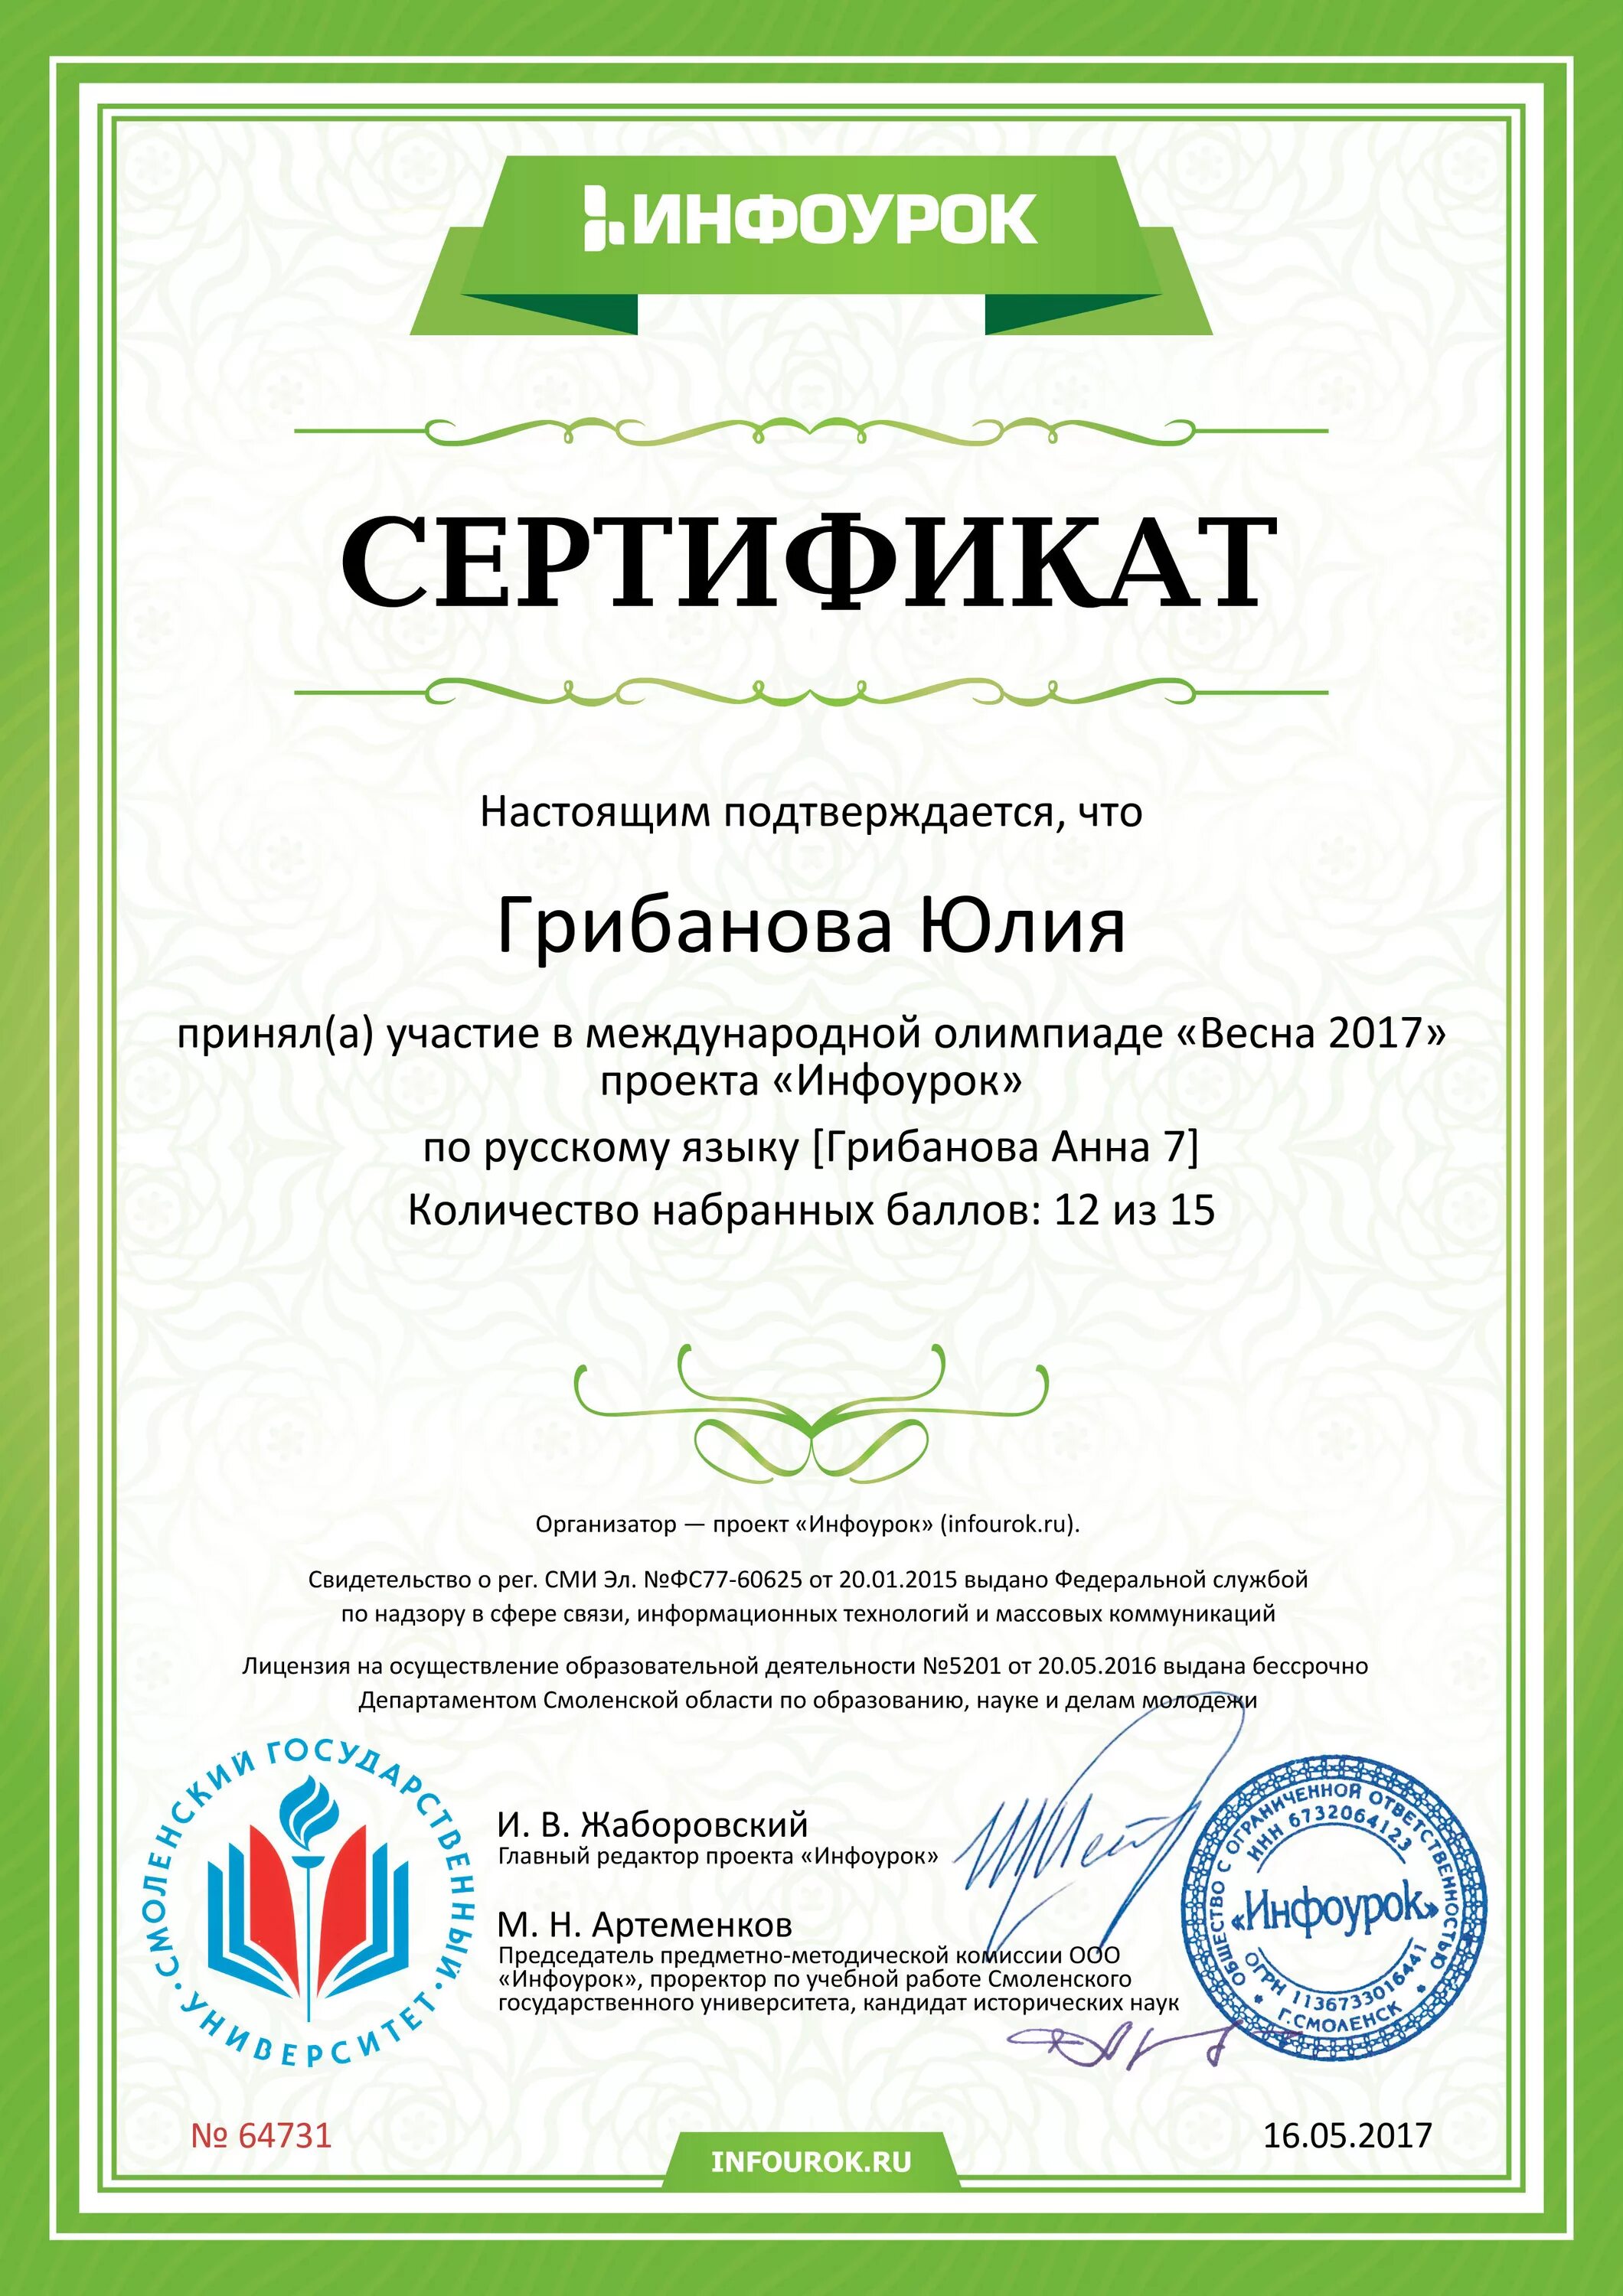 1 infourok ru. Сертификат Инфоурок. Инфоурок дипломы сертификаты.